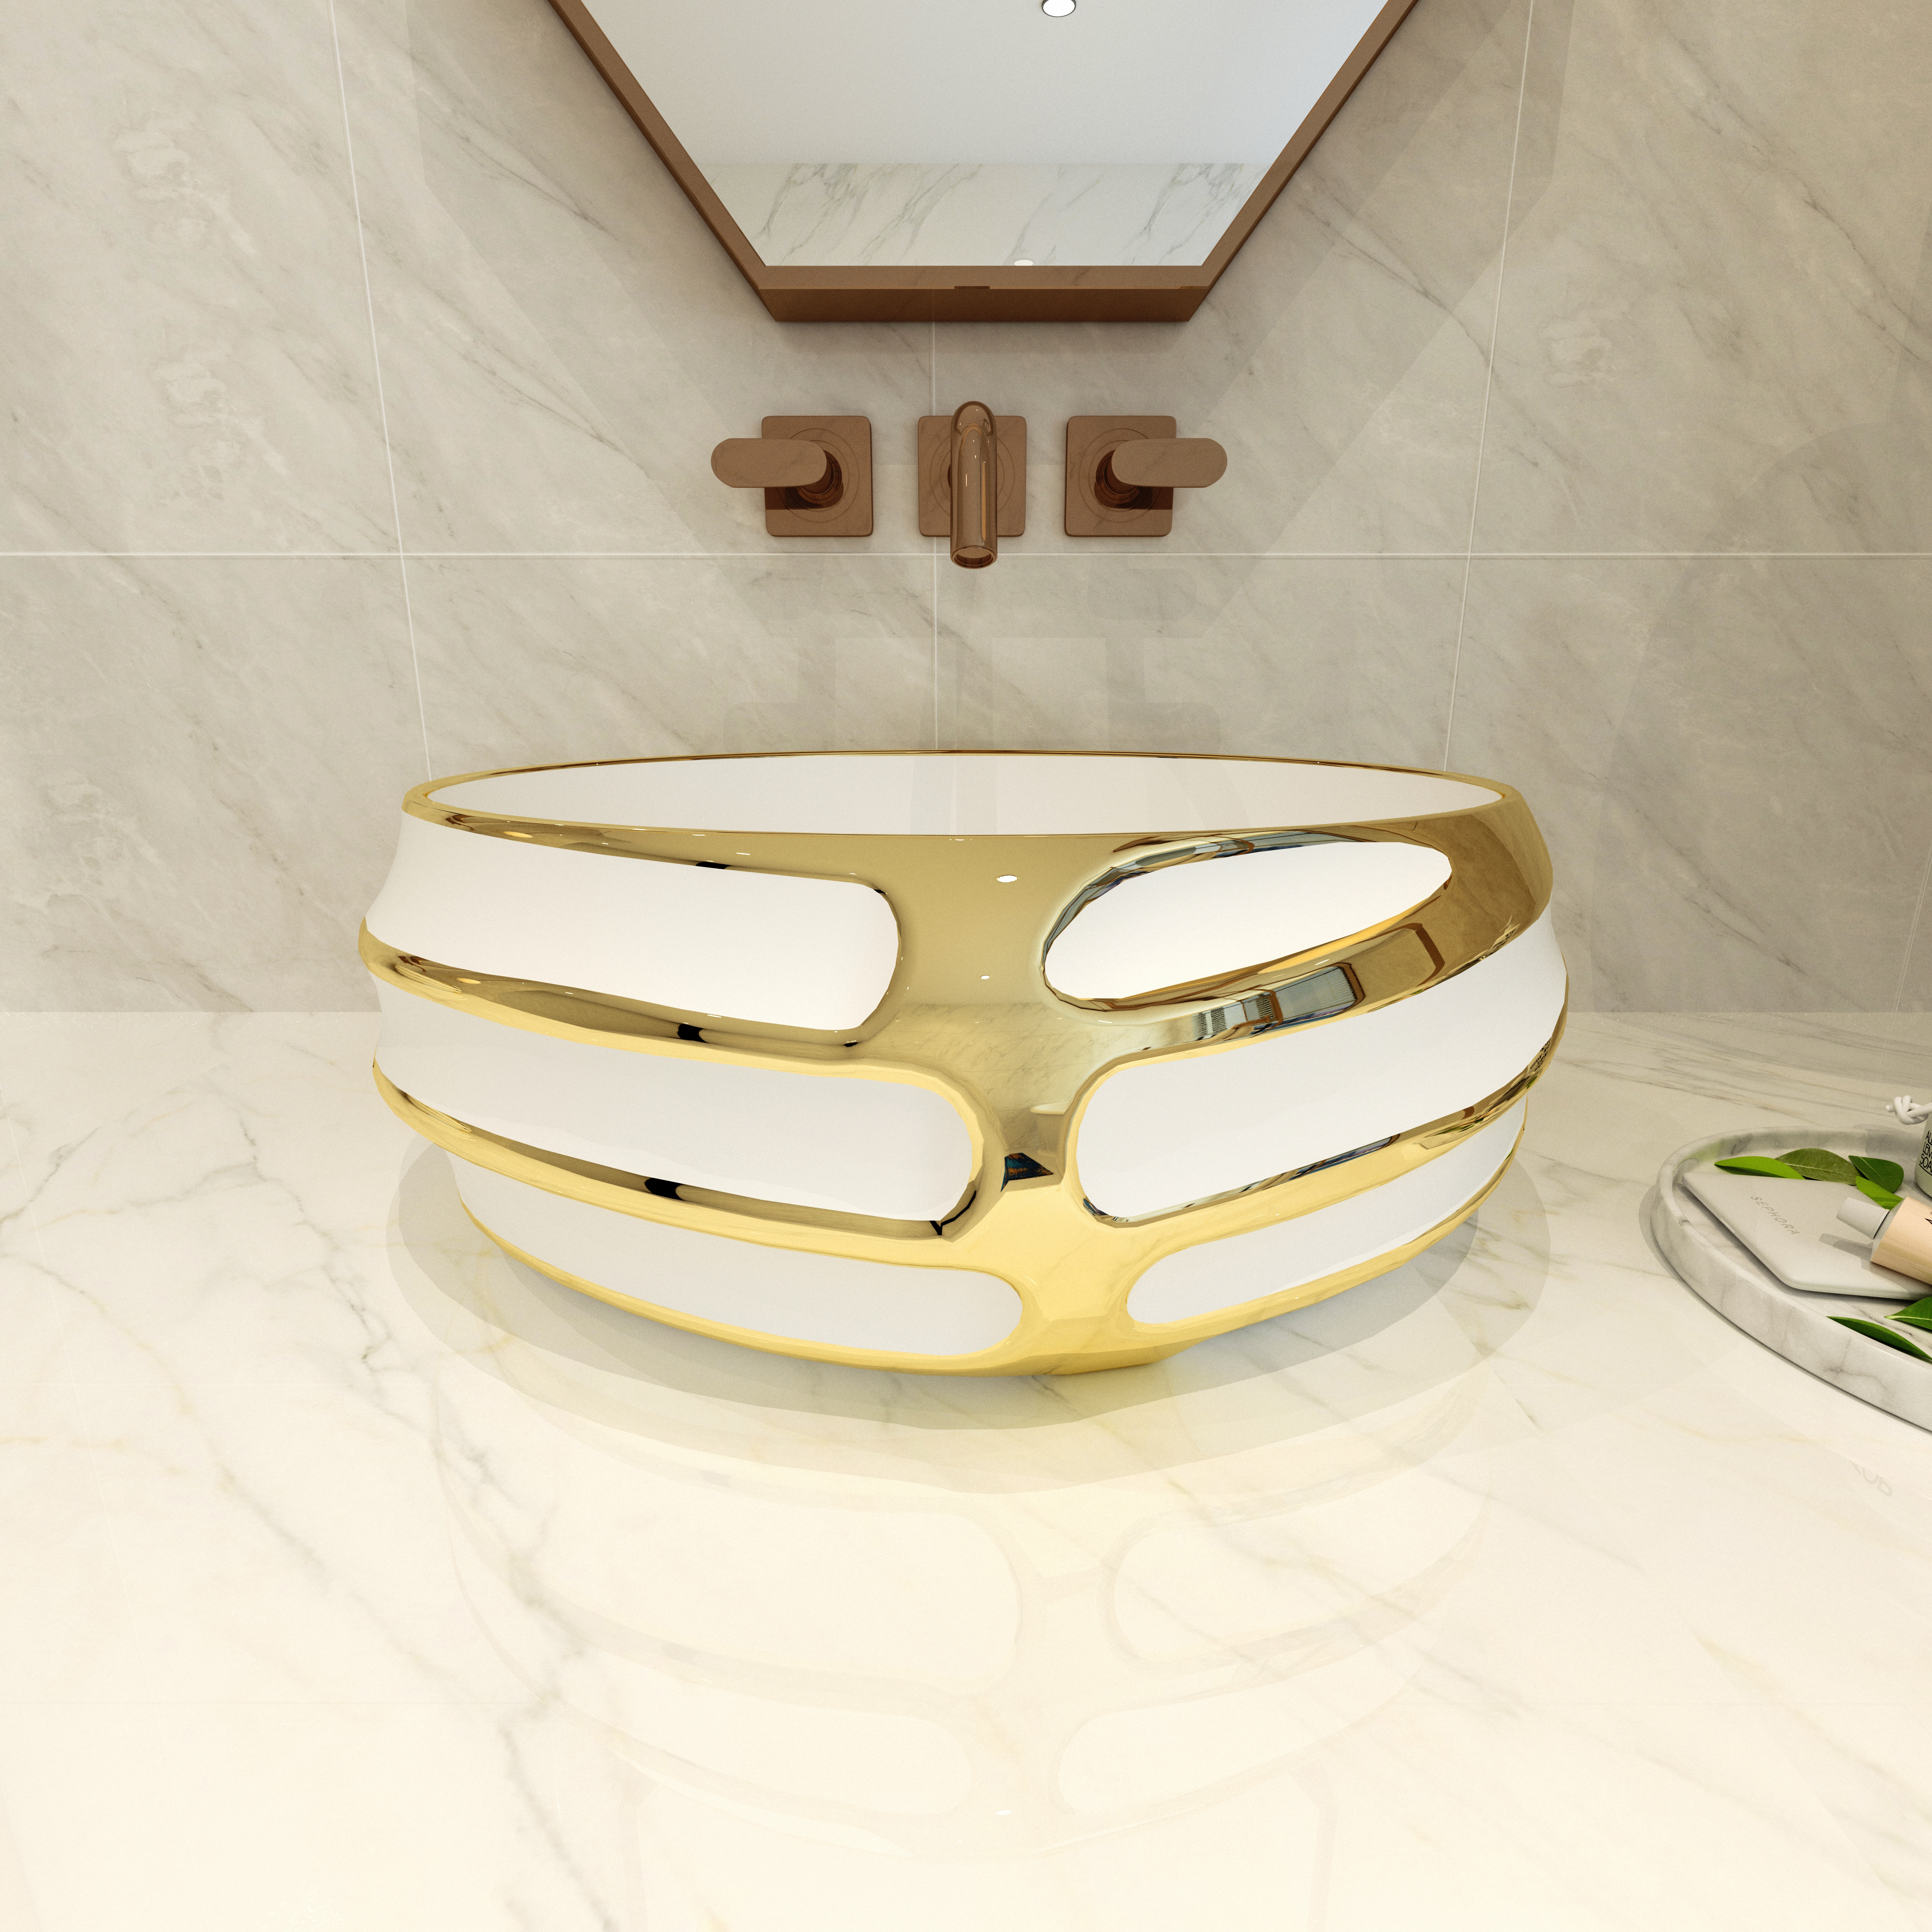 MEJE 18 Inch Above Counter Art Basin Oval Embossed Pattern With Gold Trim Design, Countertop Bathroom Vessel Sink, Porcelain Ceramic Vanity Sink (Include pop up drain)